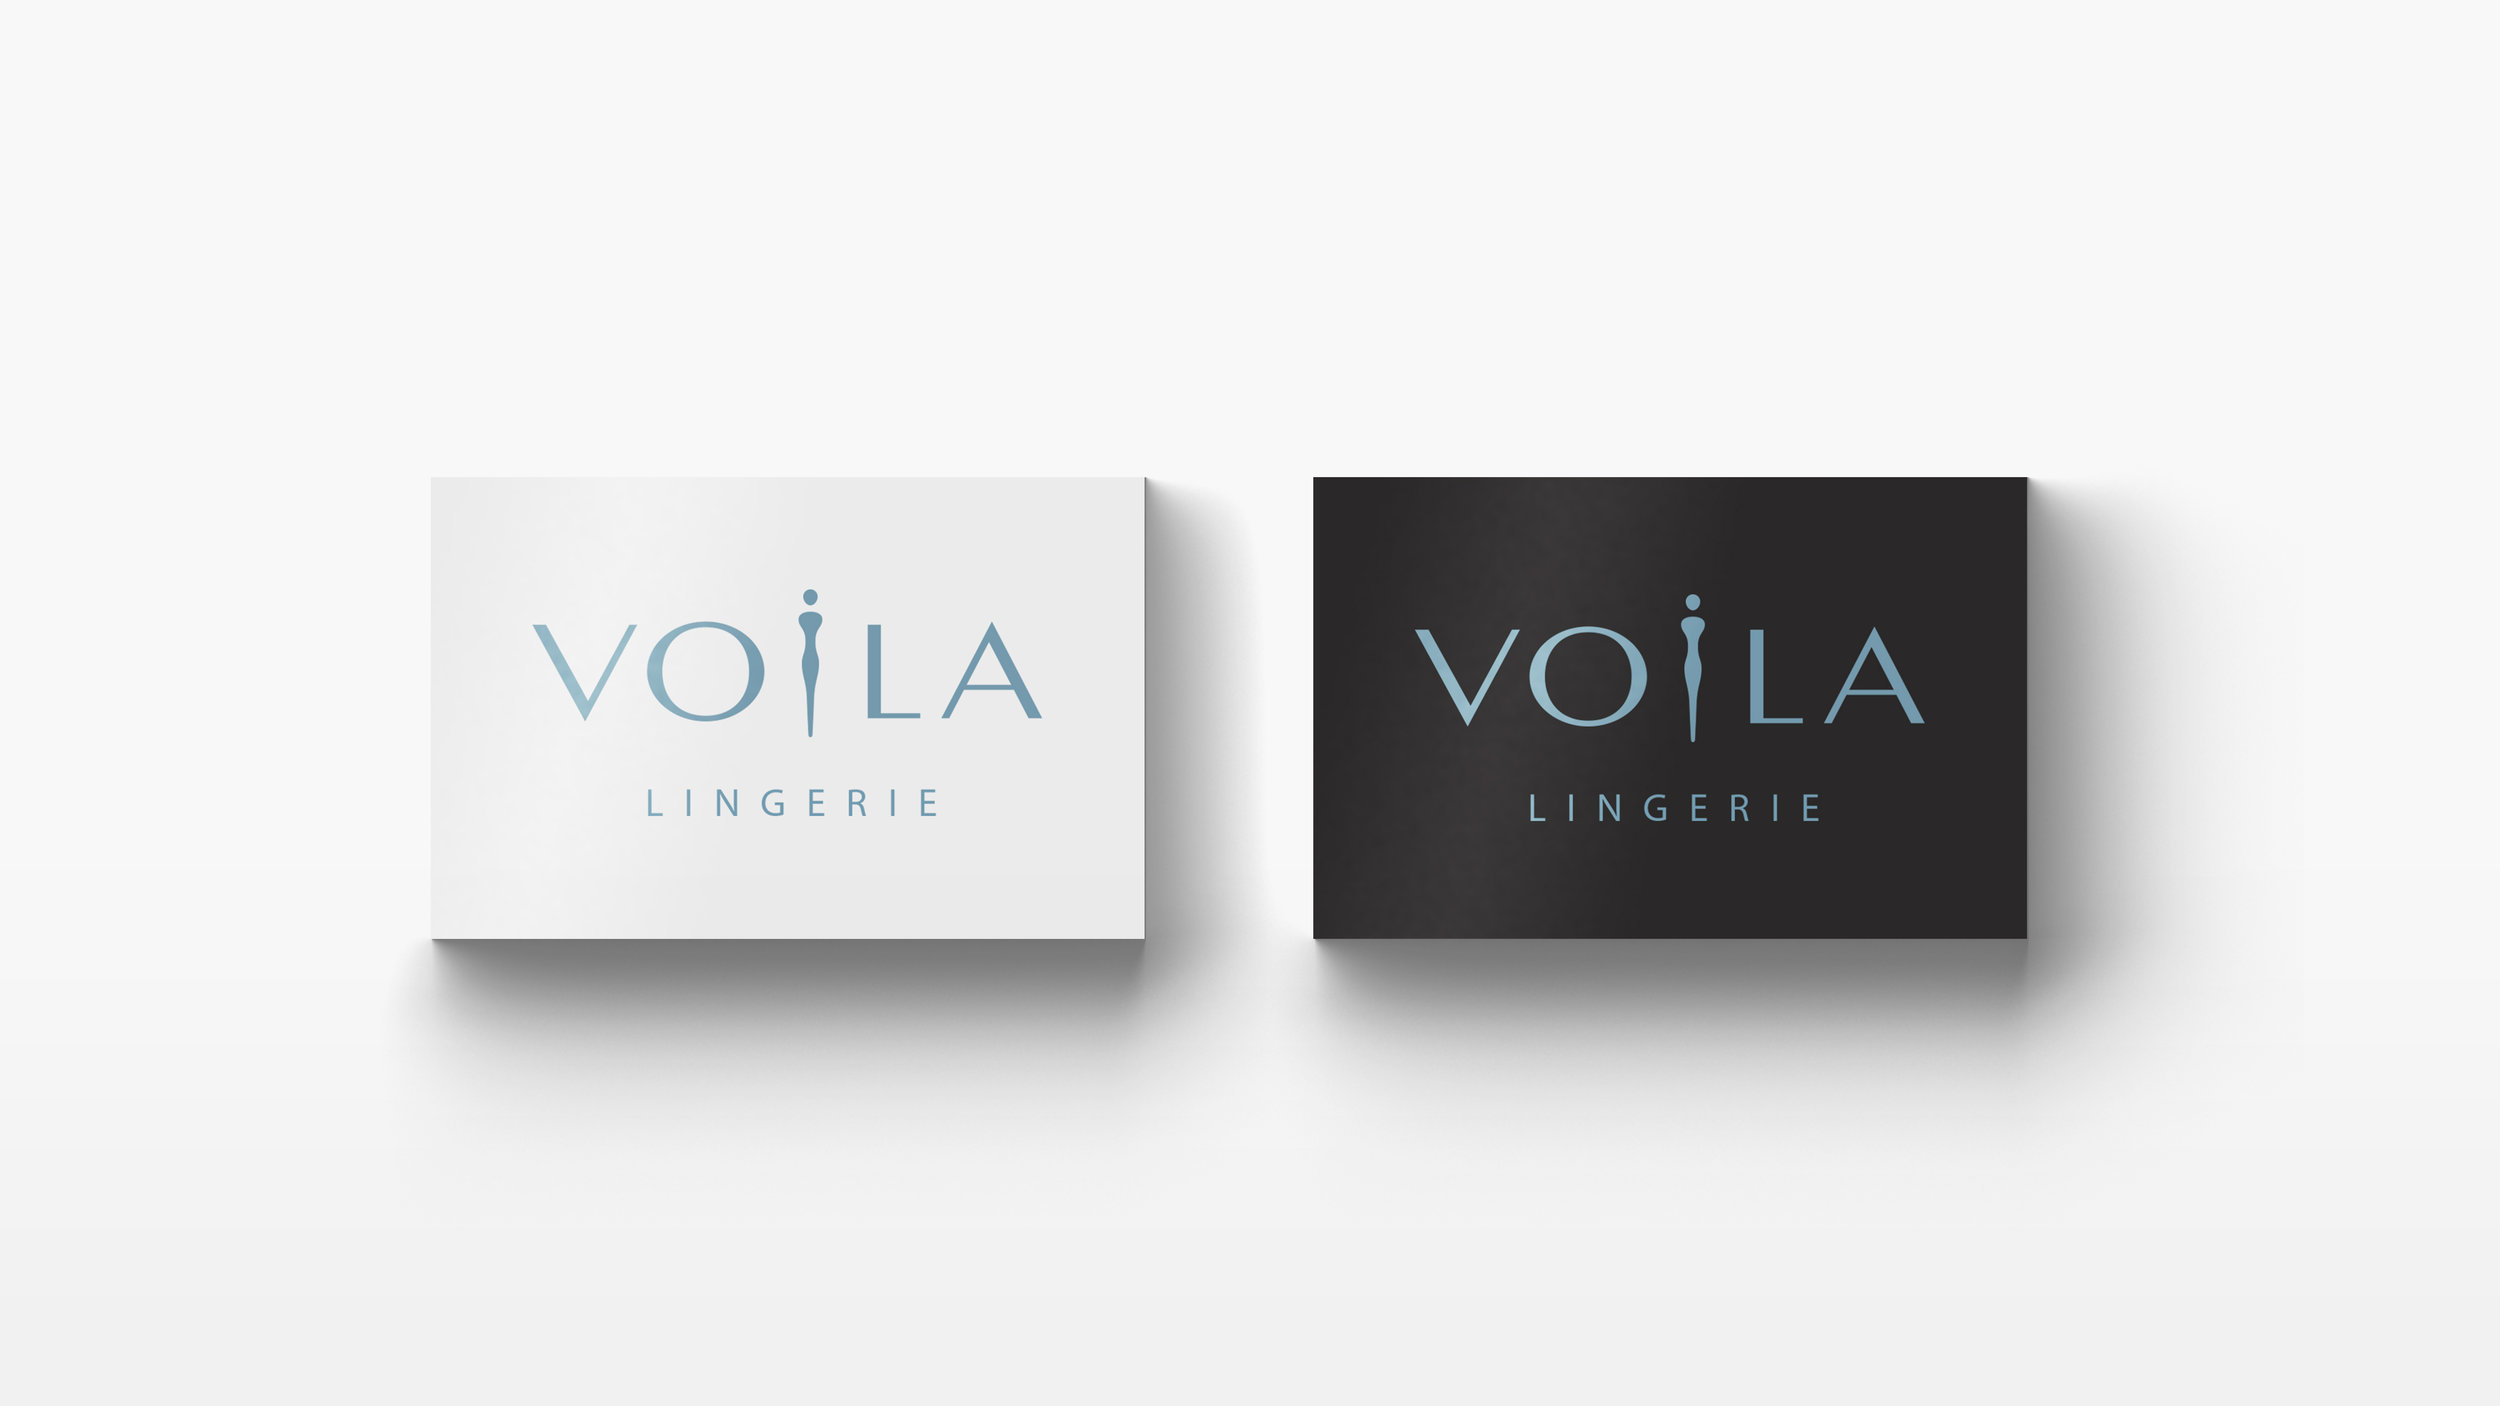 Brand_republica_voila_lingerie_logo_design_business_cards.jpg